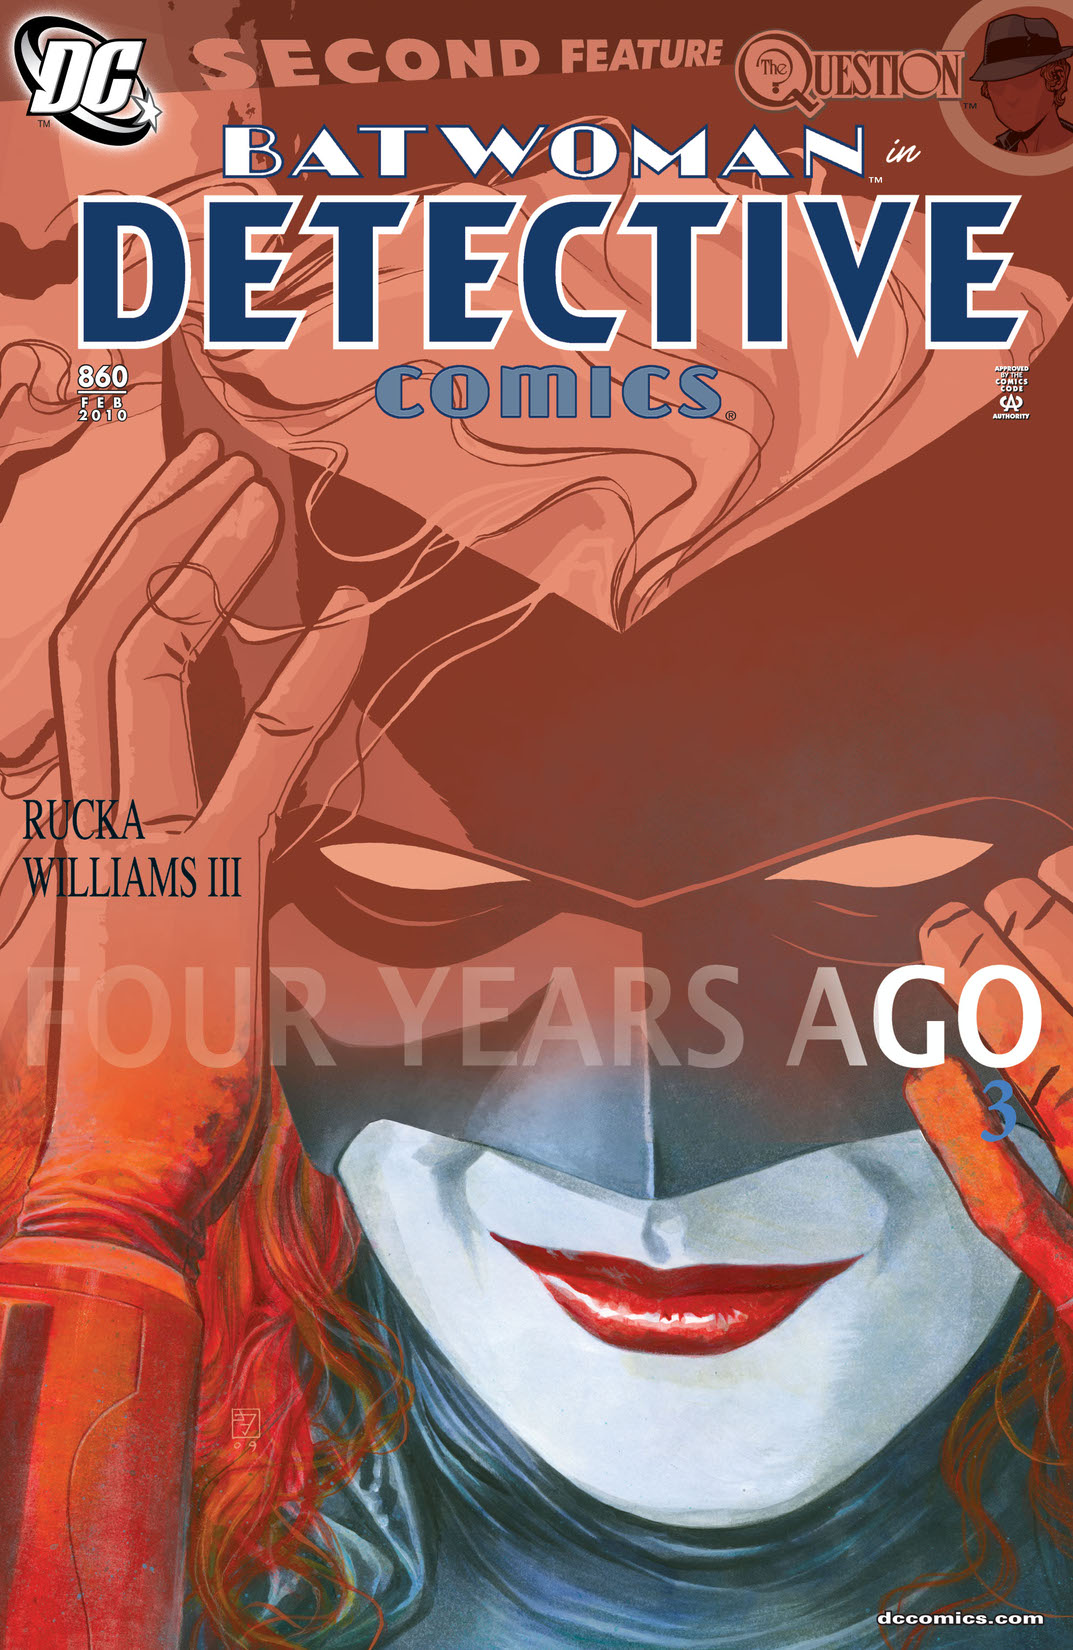 Detective Comics (1937-) #860 preview images